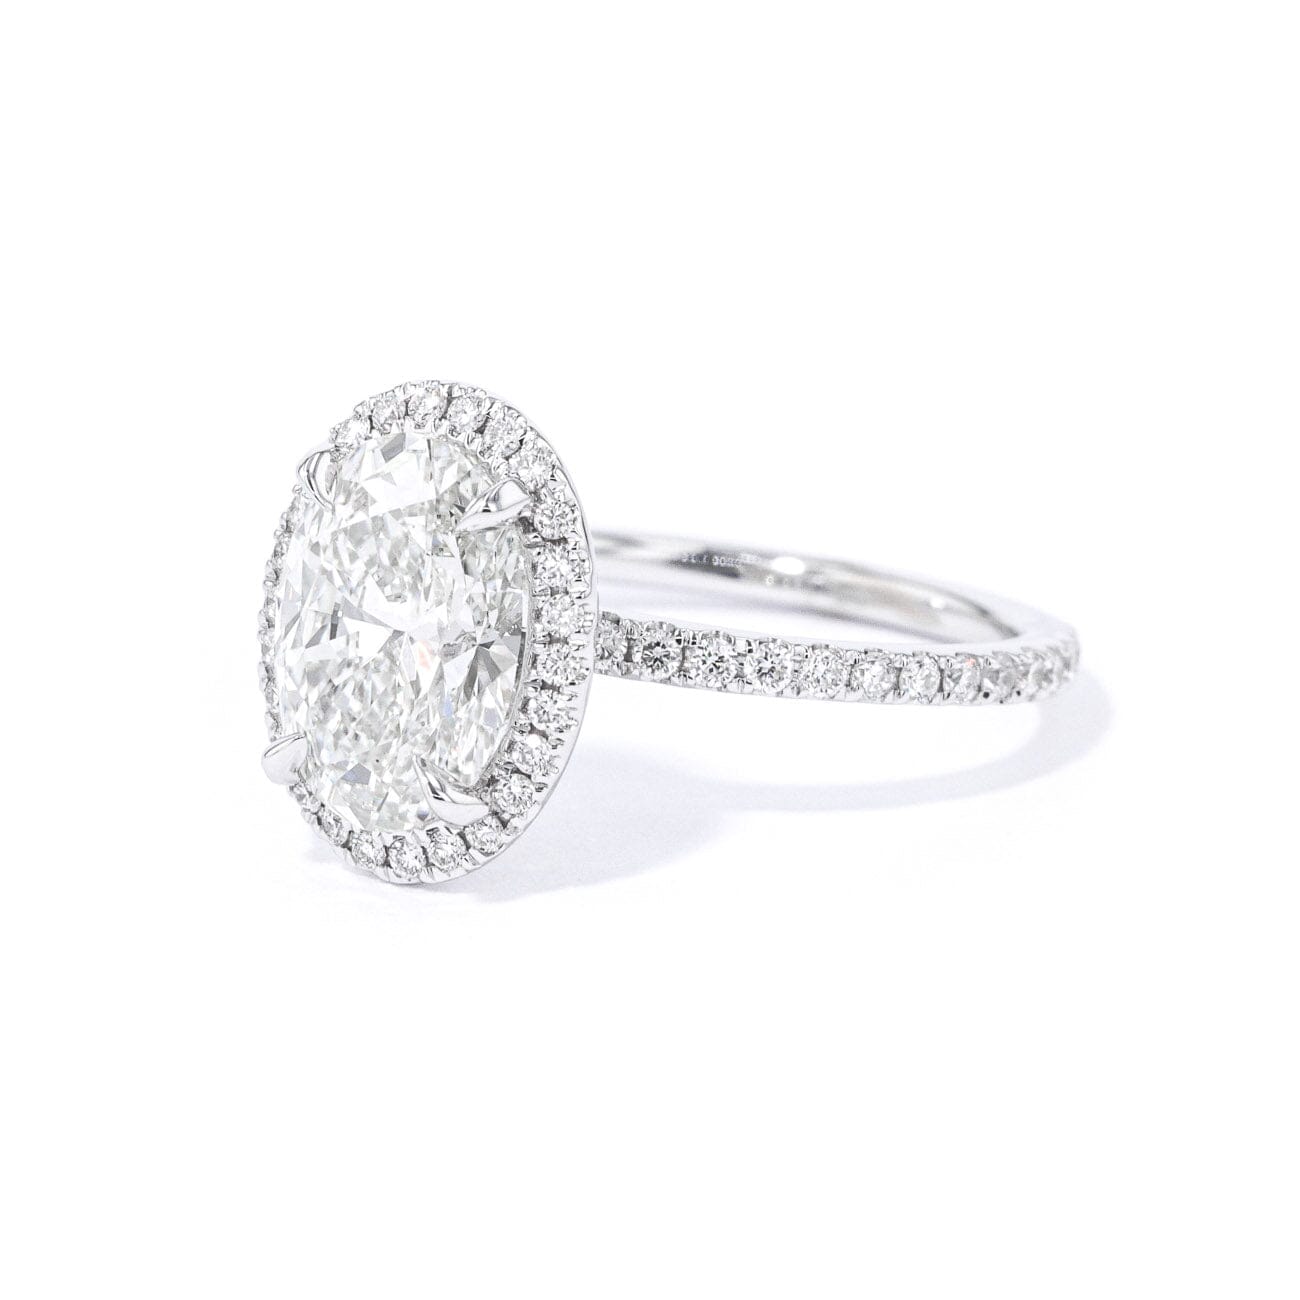 1.6mm Angela Oval Engagement Rings Princess Bride Diamonds 